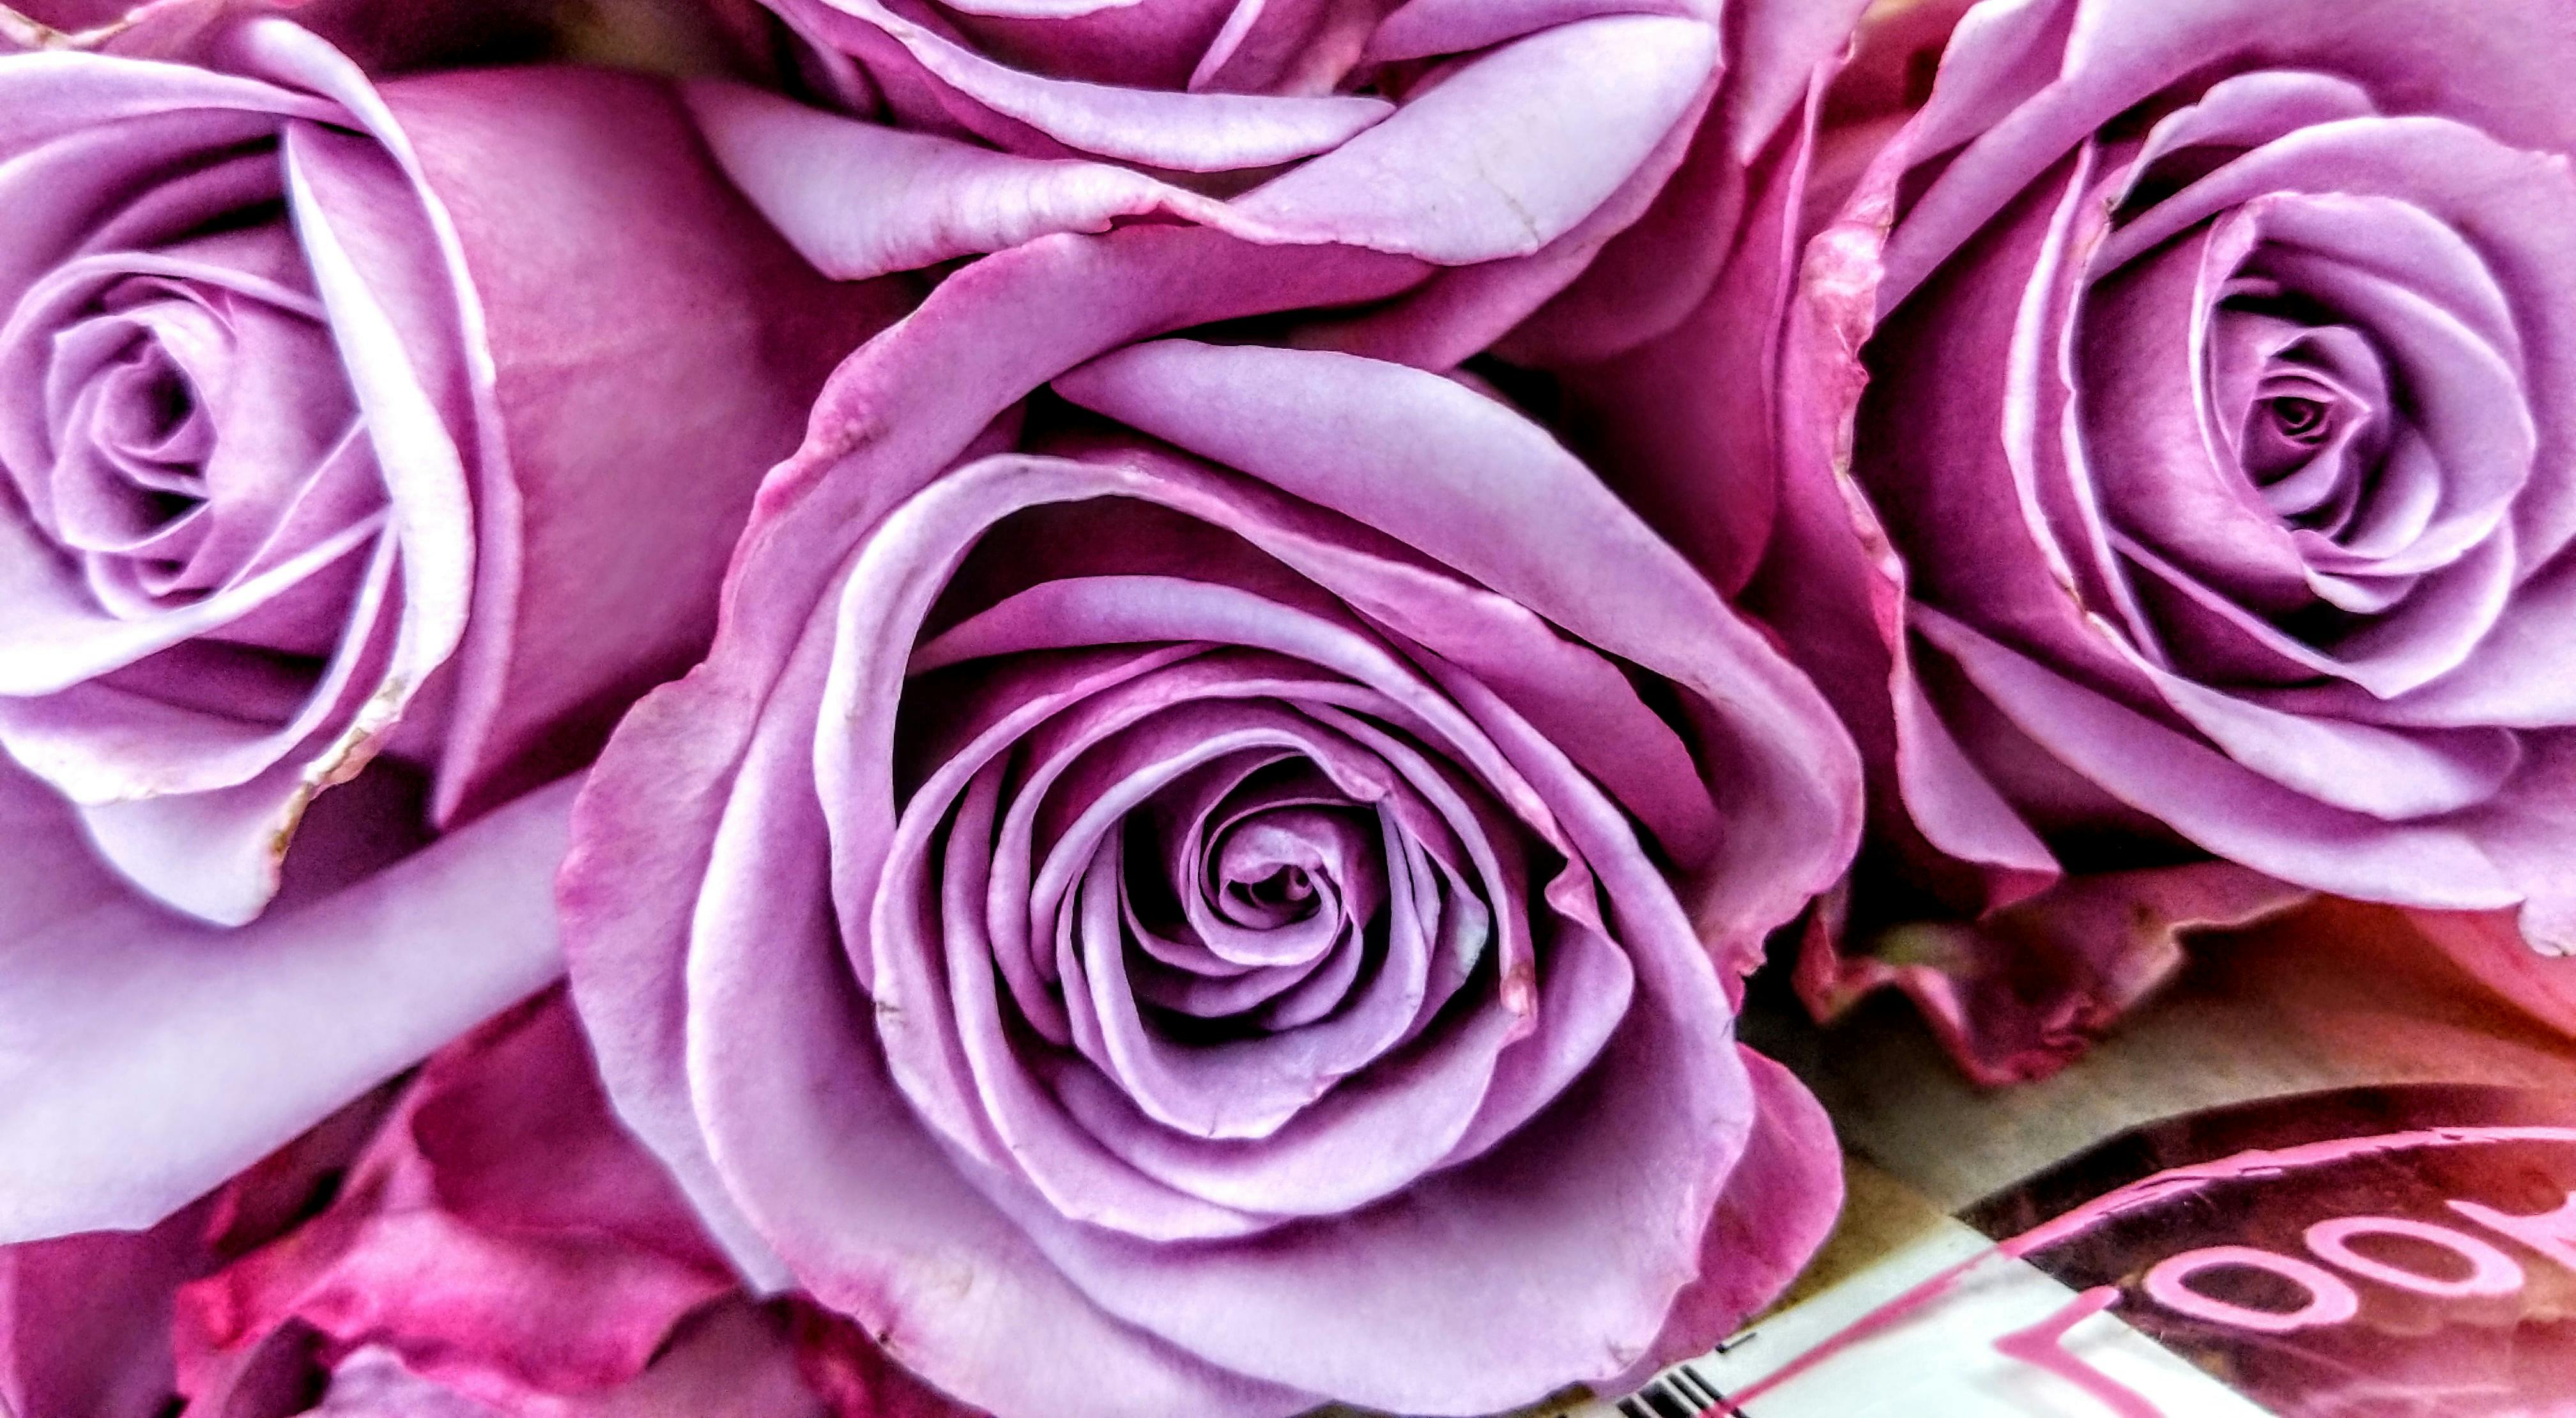 Free stock photo of purple flowers, Purple roses, roses